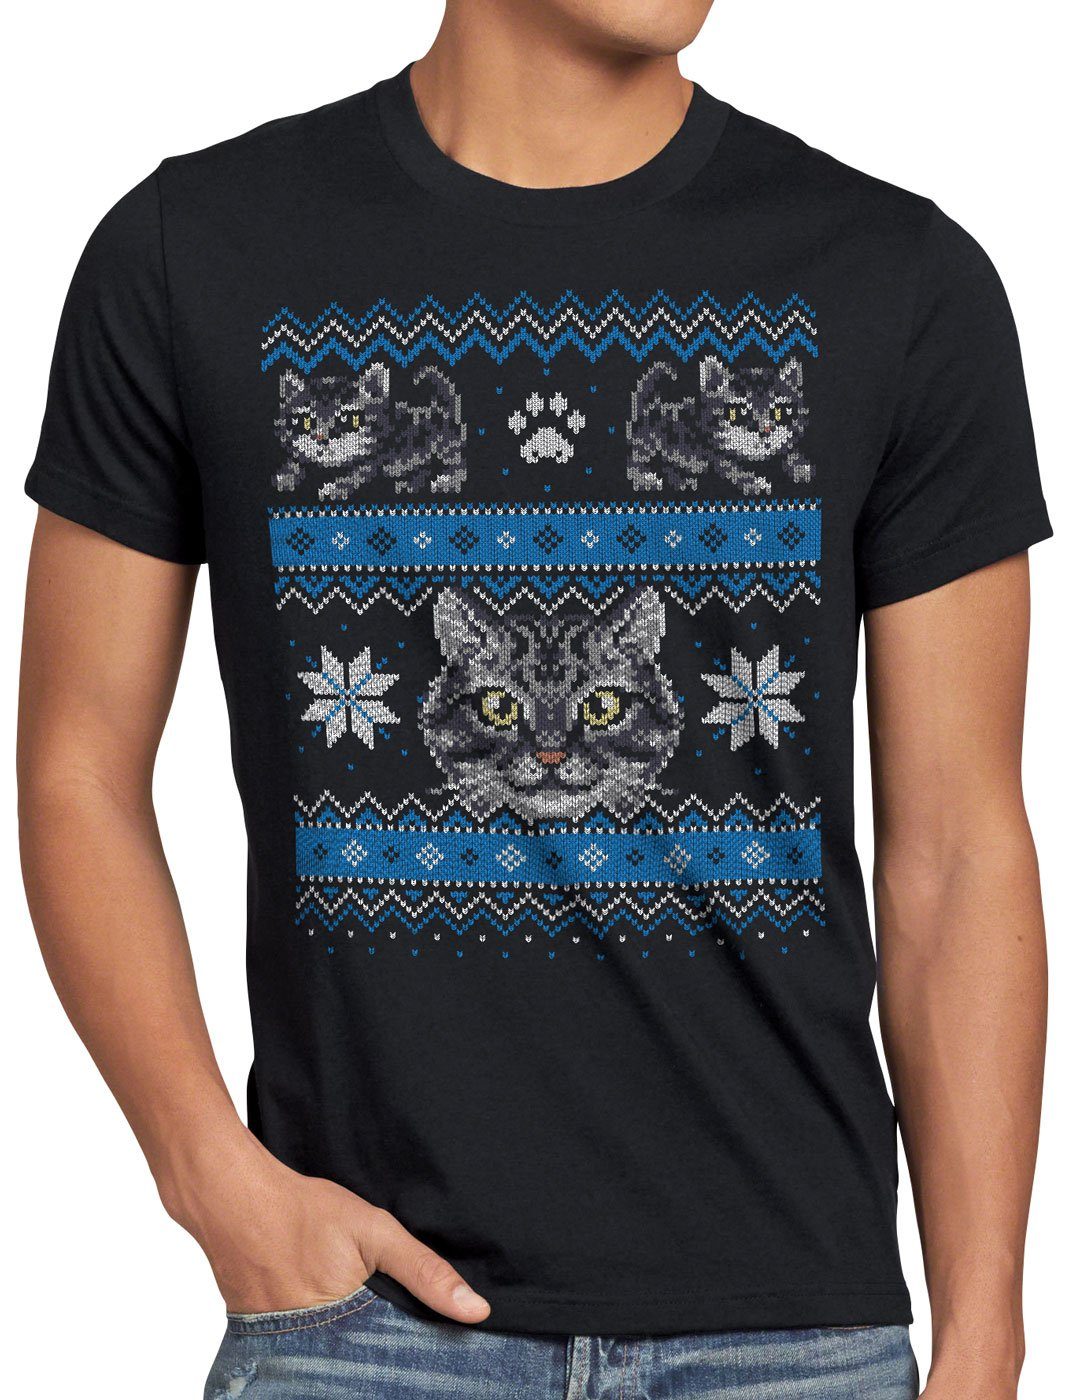 style3 Print-Shirt Herren weihnachtsbaum Jumper Christmas x-mas kater pulli Kitten samtpfote T-Shirt